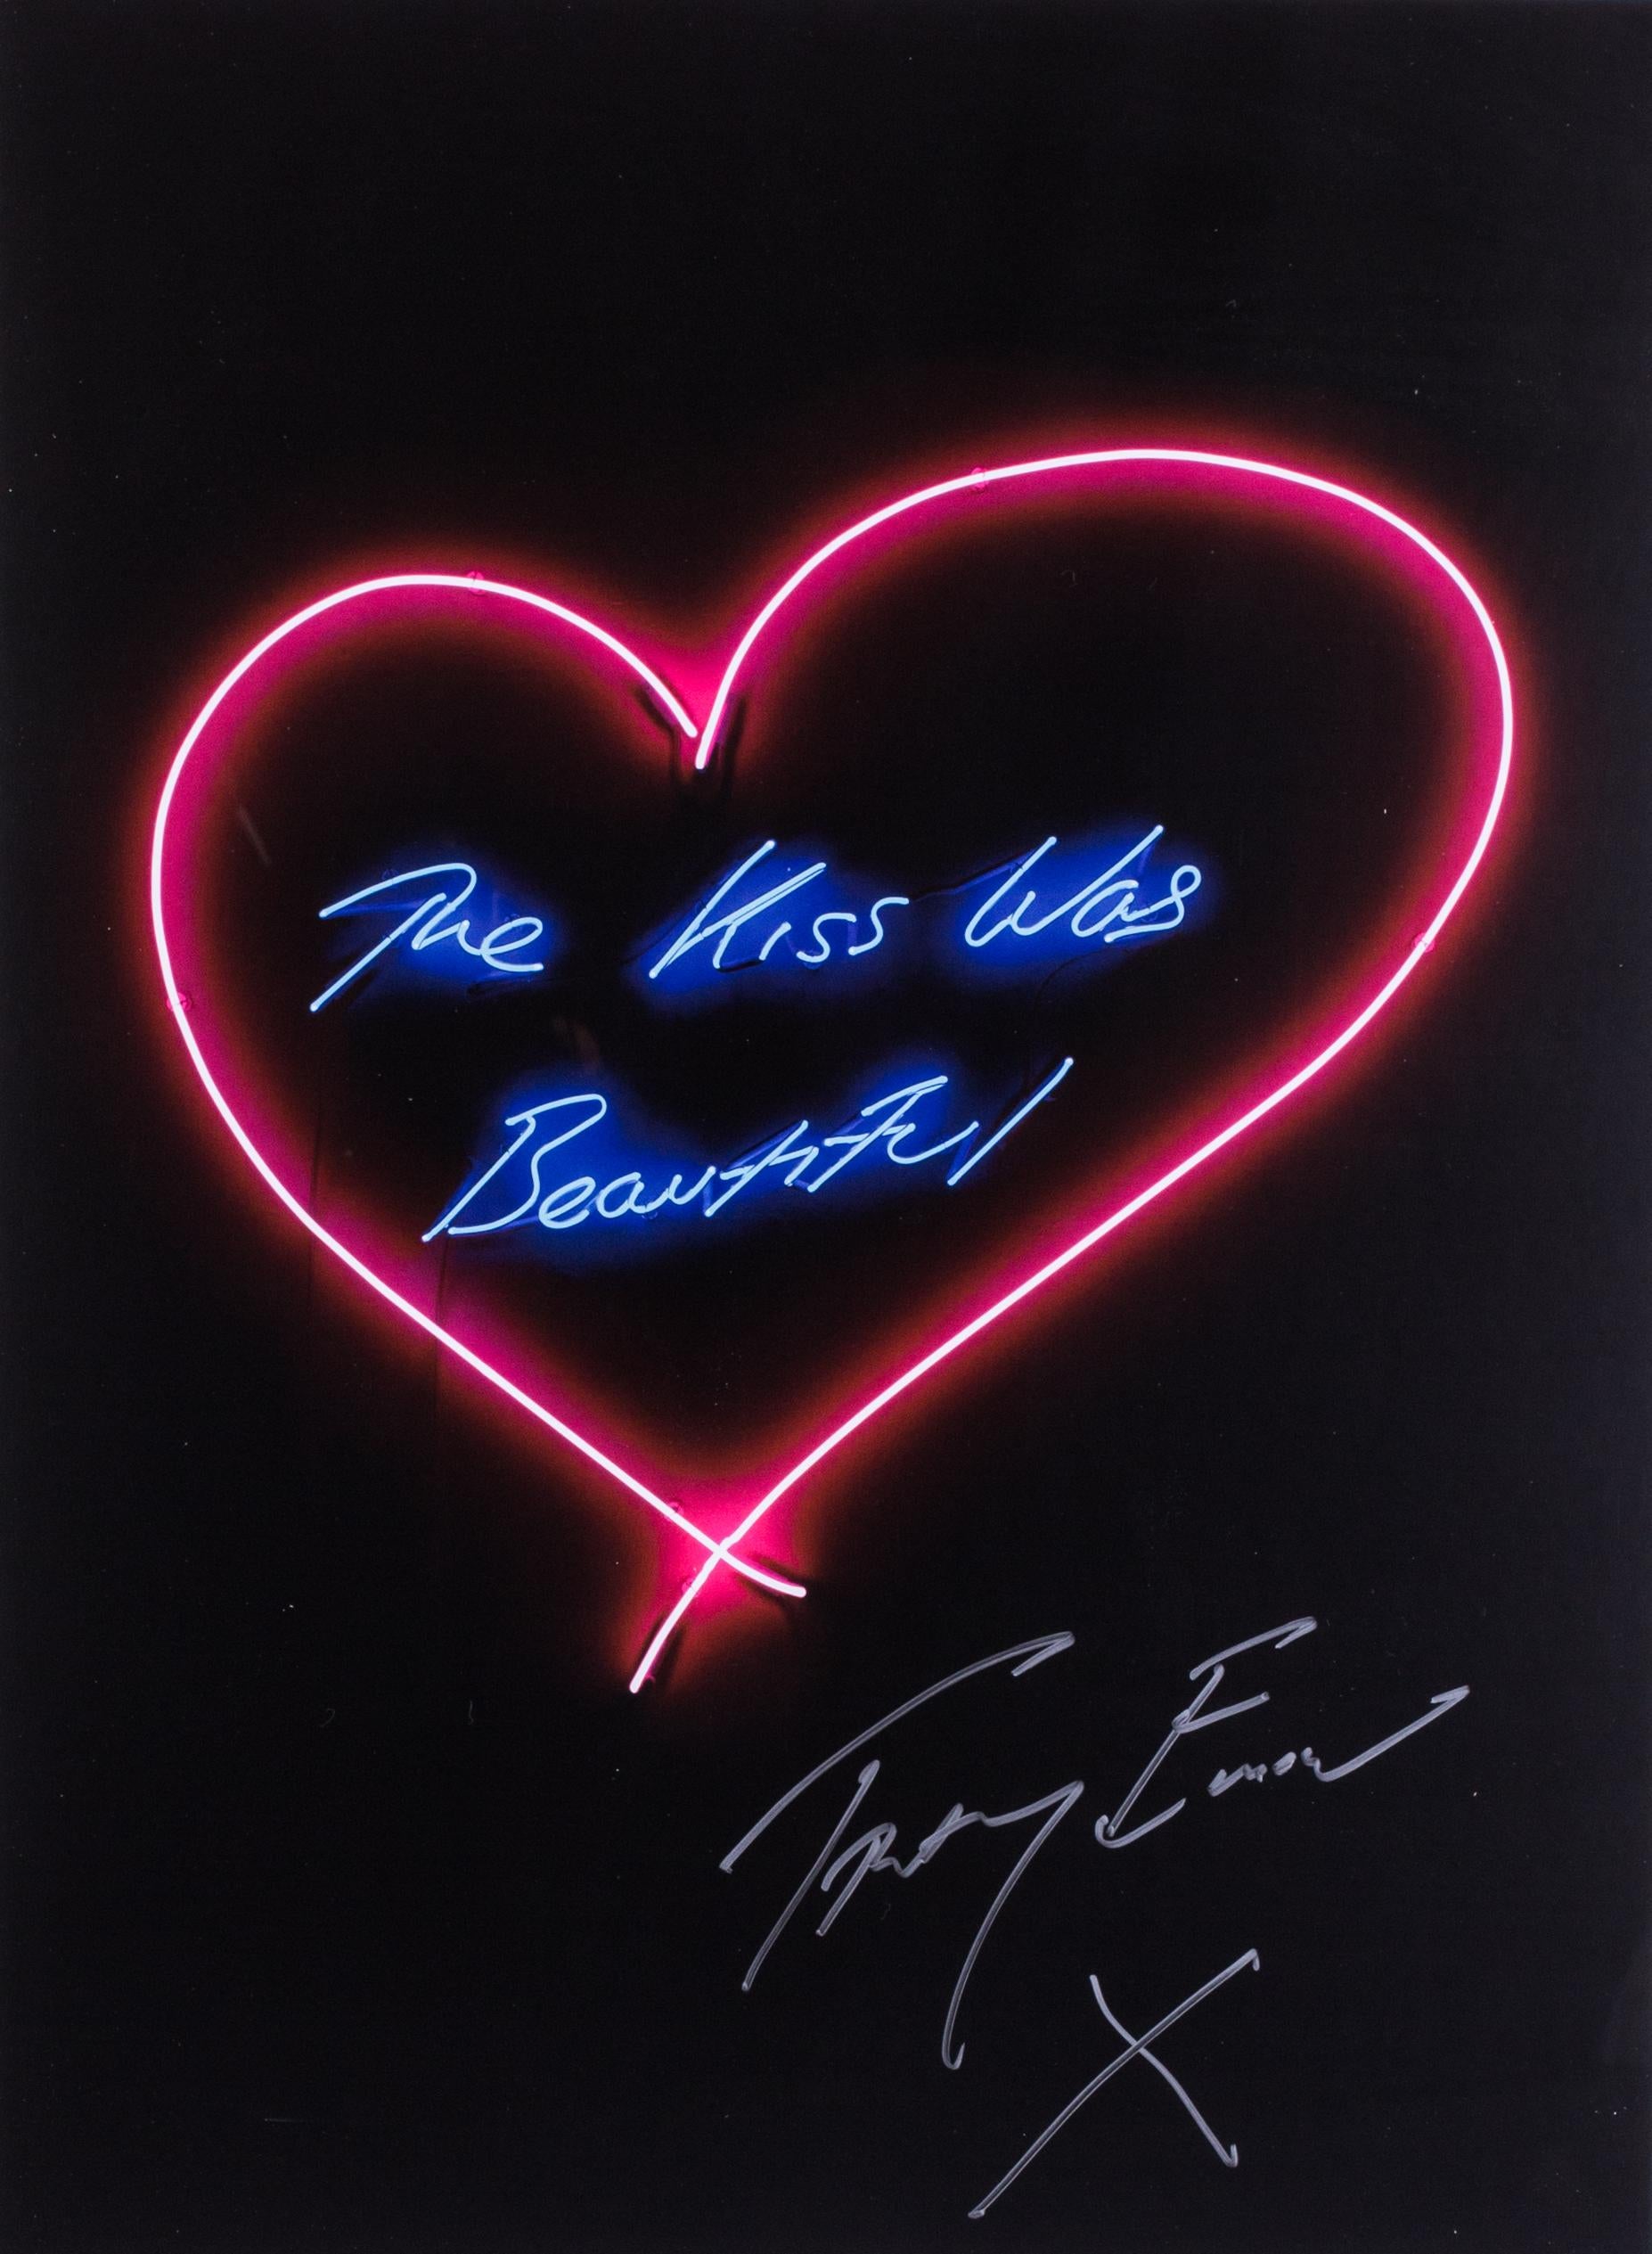 Tracey Emin Print - The Kiss was beautiful